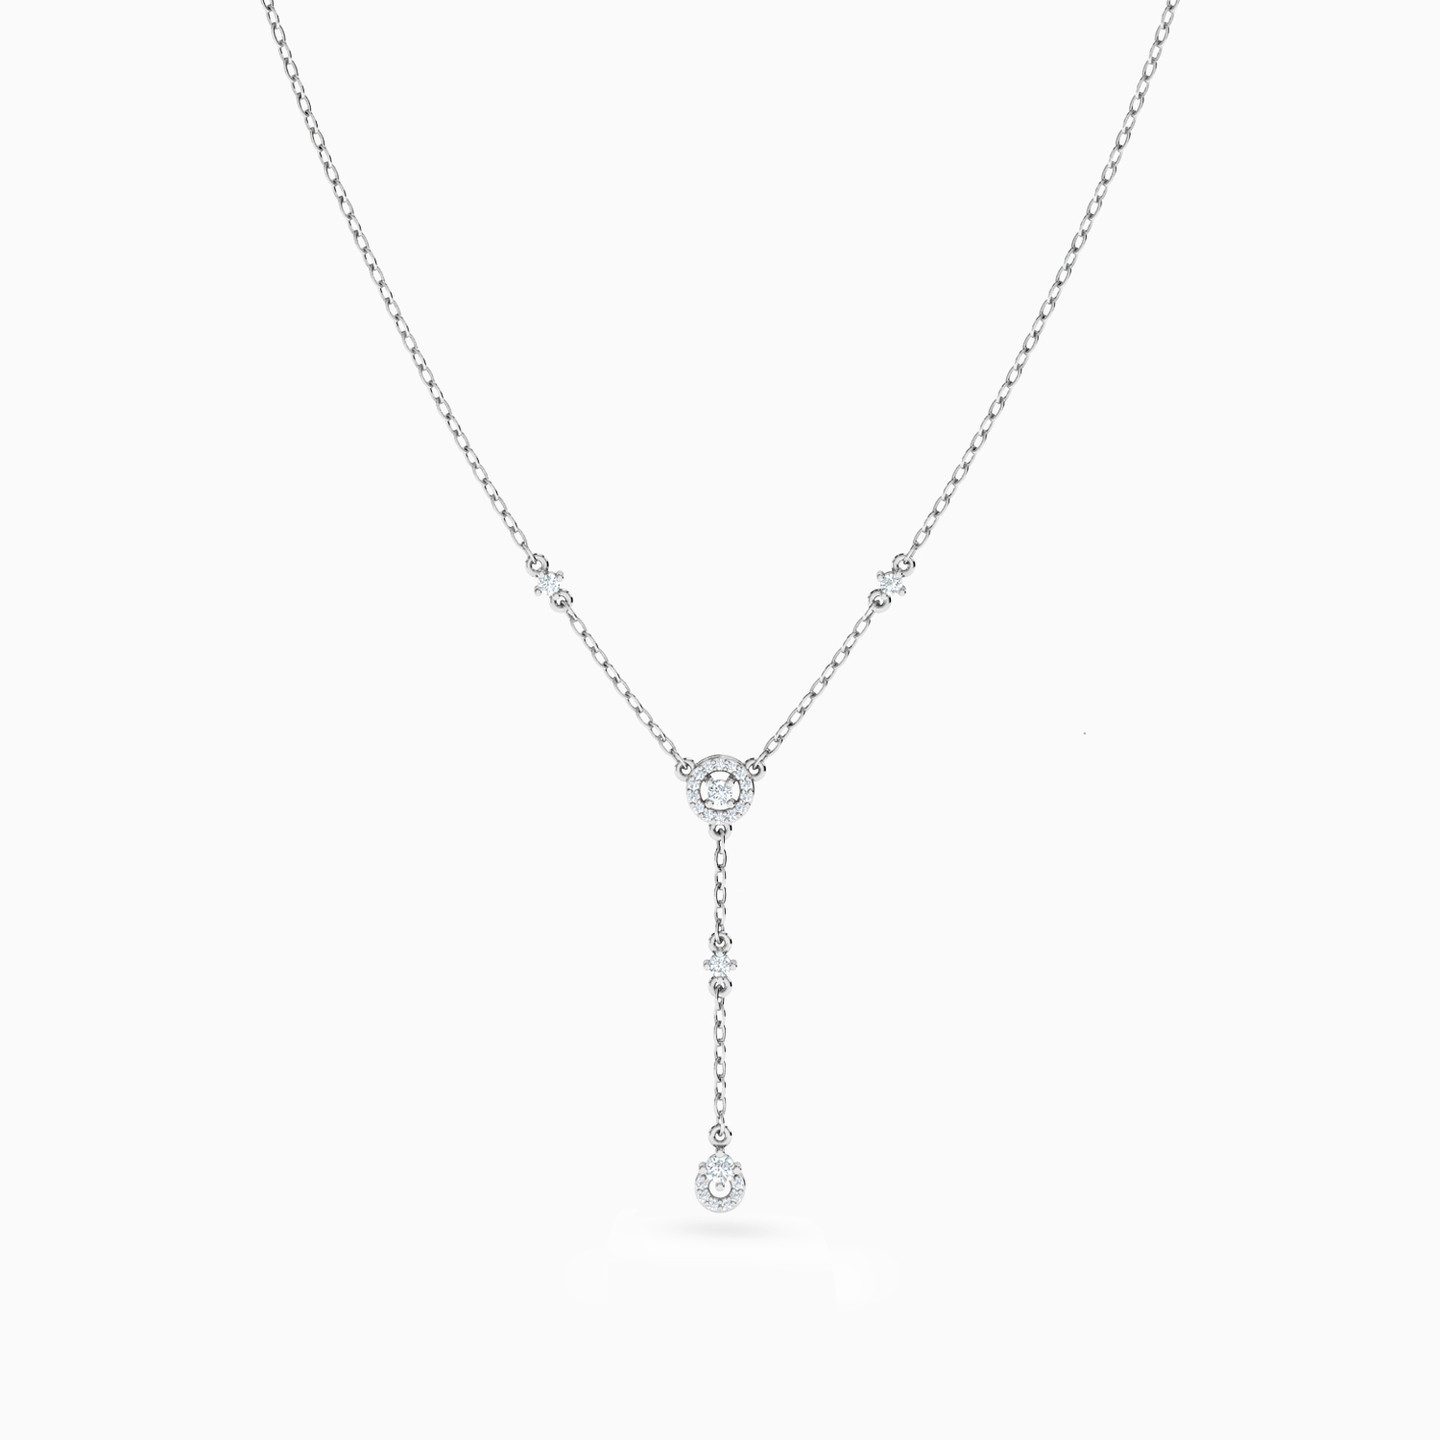 18K Gold Diamond Drop Pendant Necklace - 3